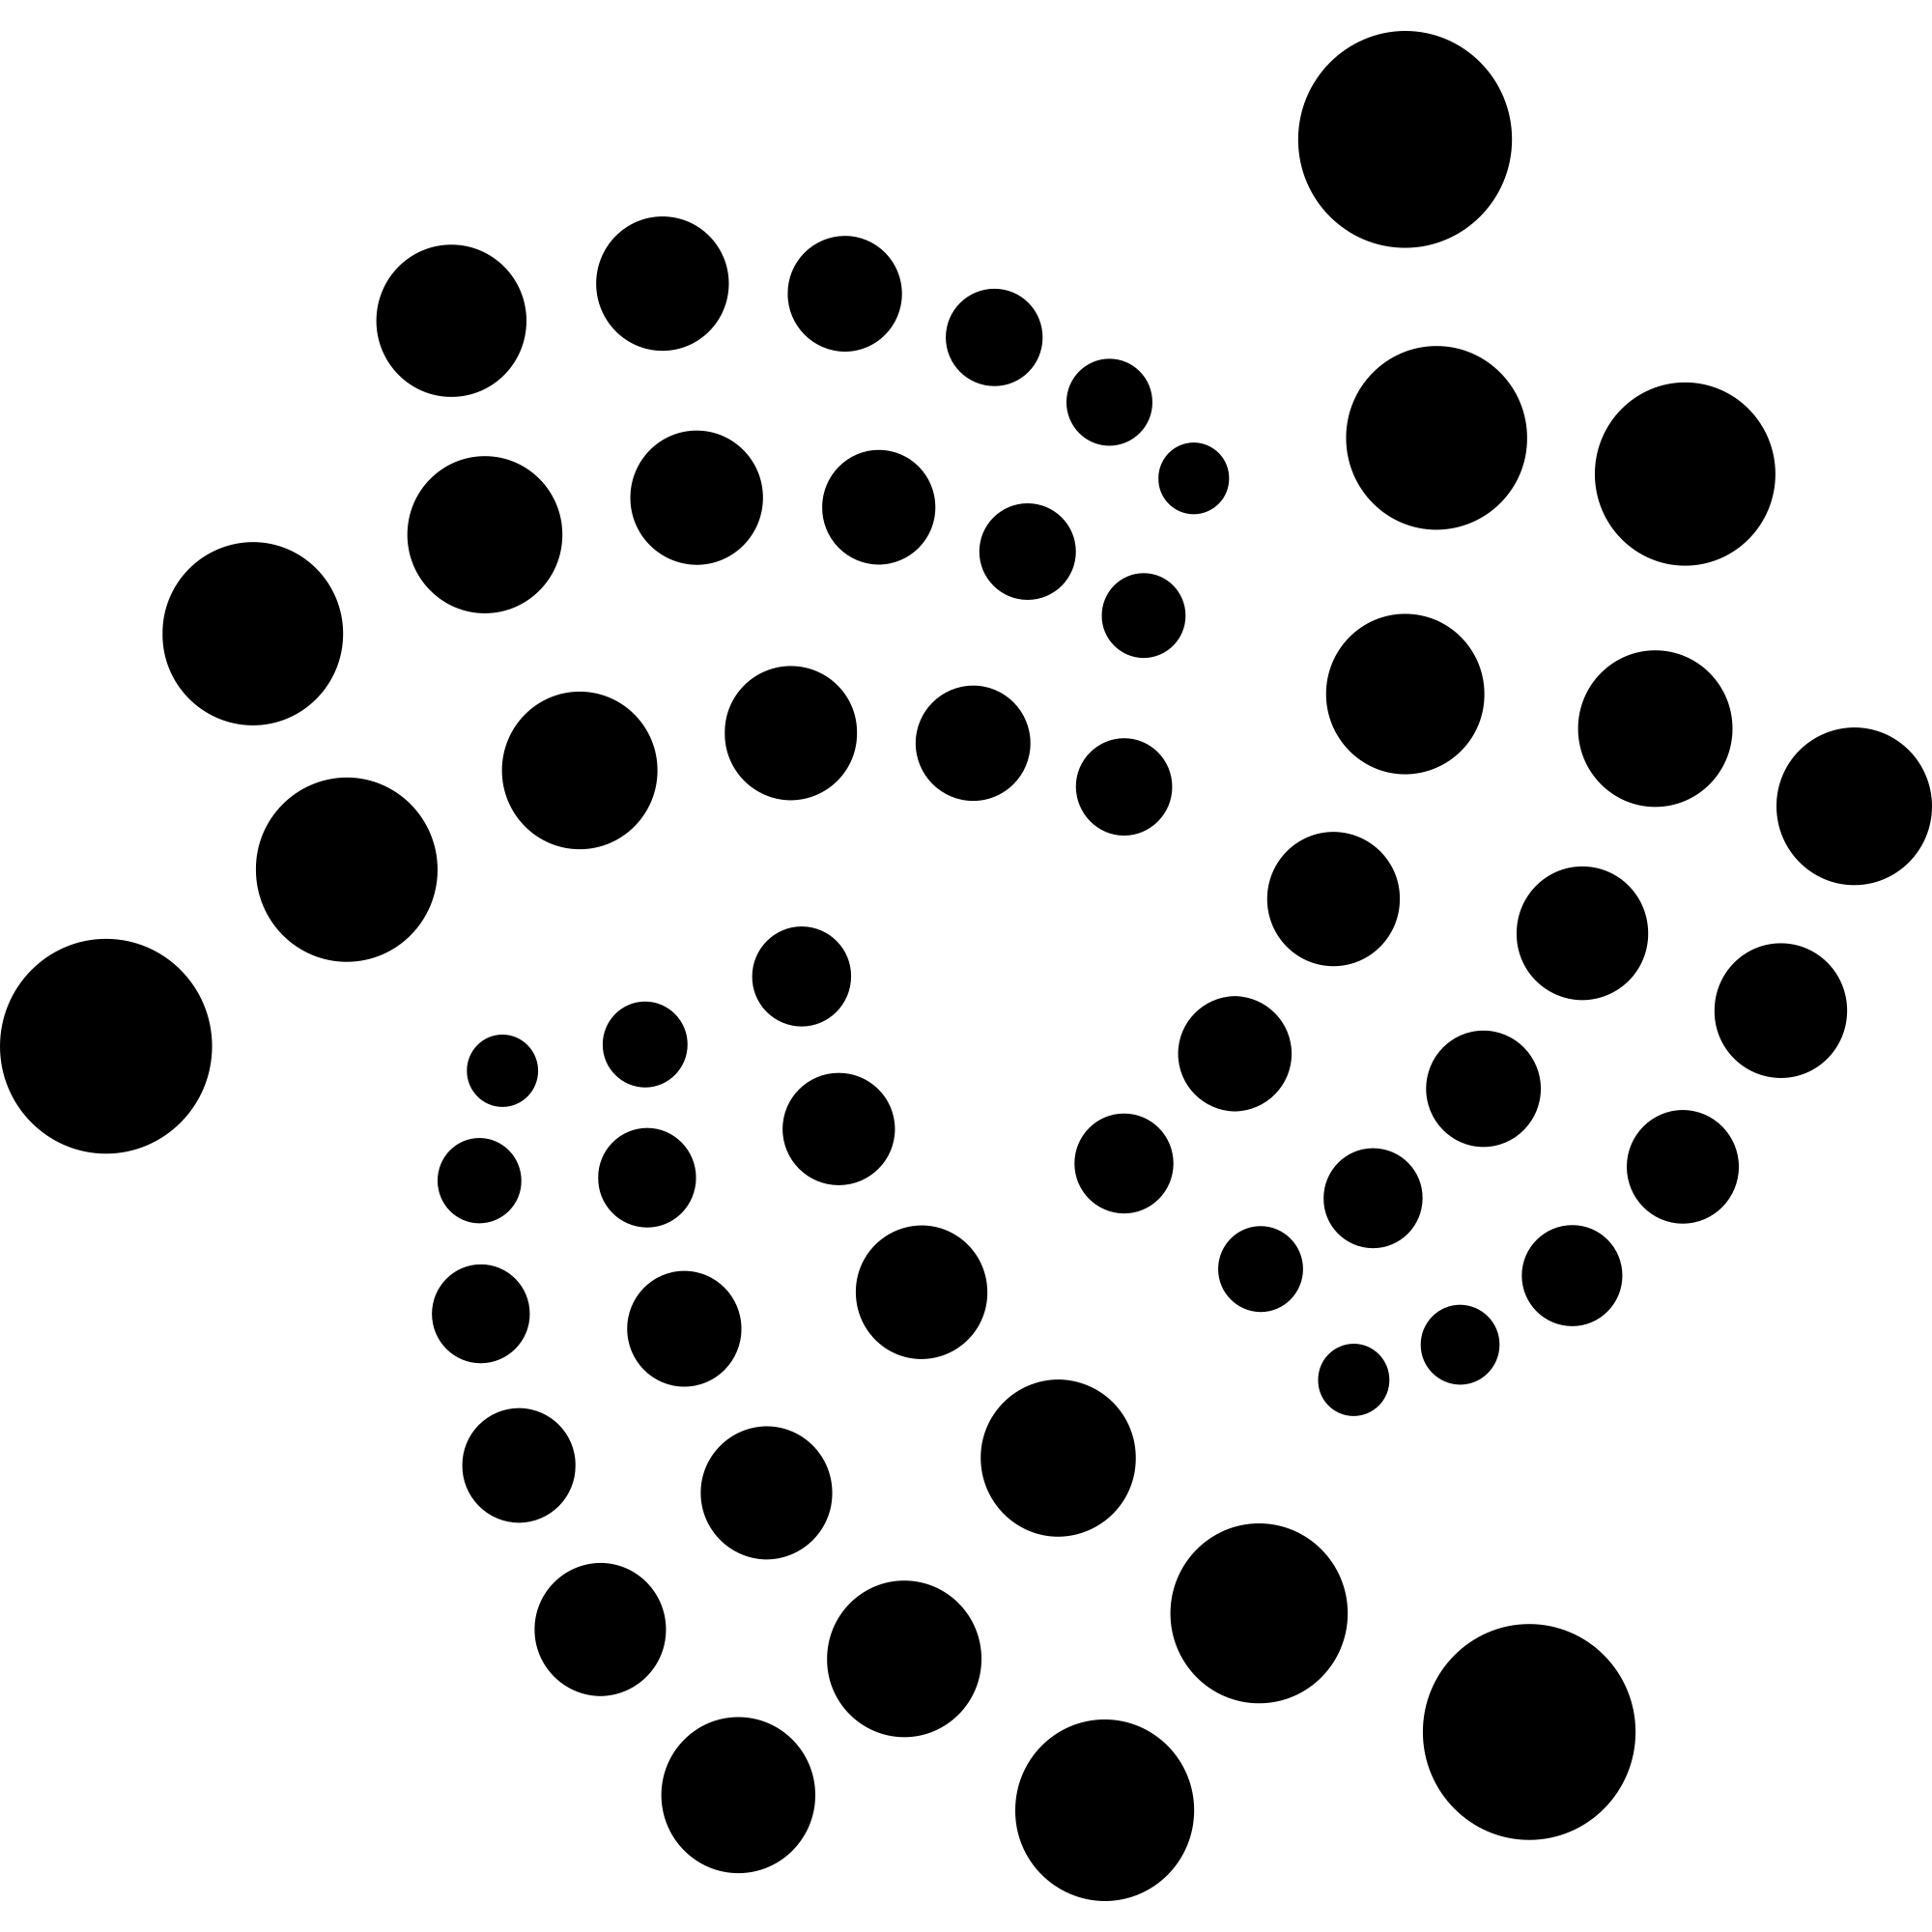 IOTA (MIOTA) Logo .SVG and .PNG Files Download